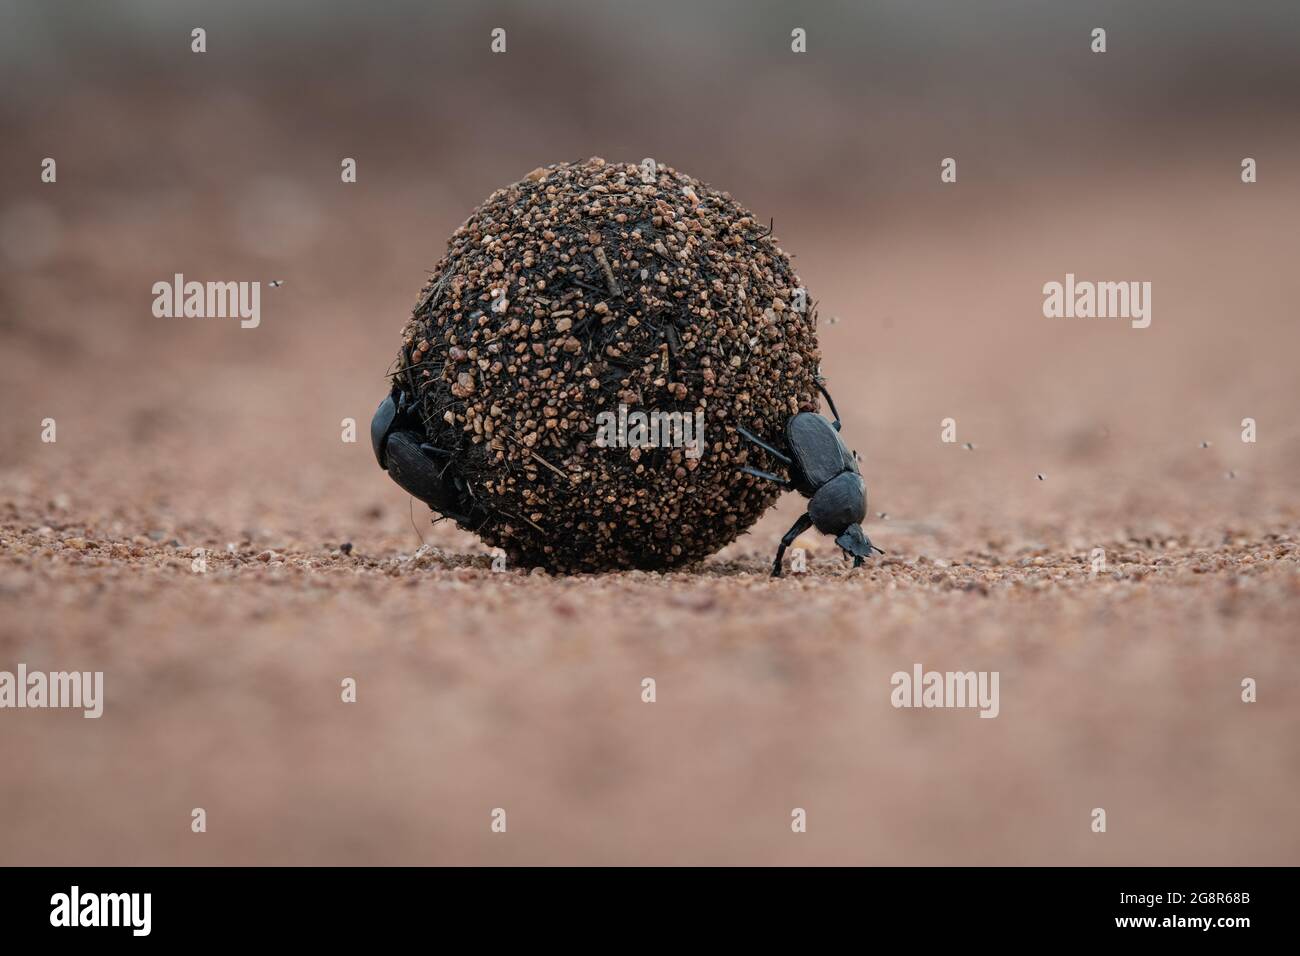 Dung beetles, Scarabaeus zambesianus, roll a ball of dung Stock Photo